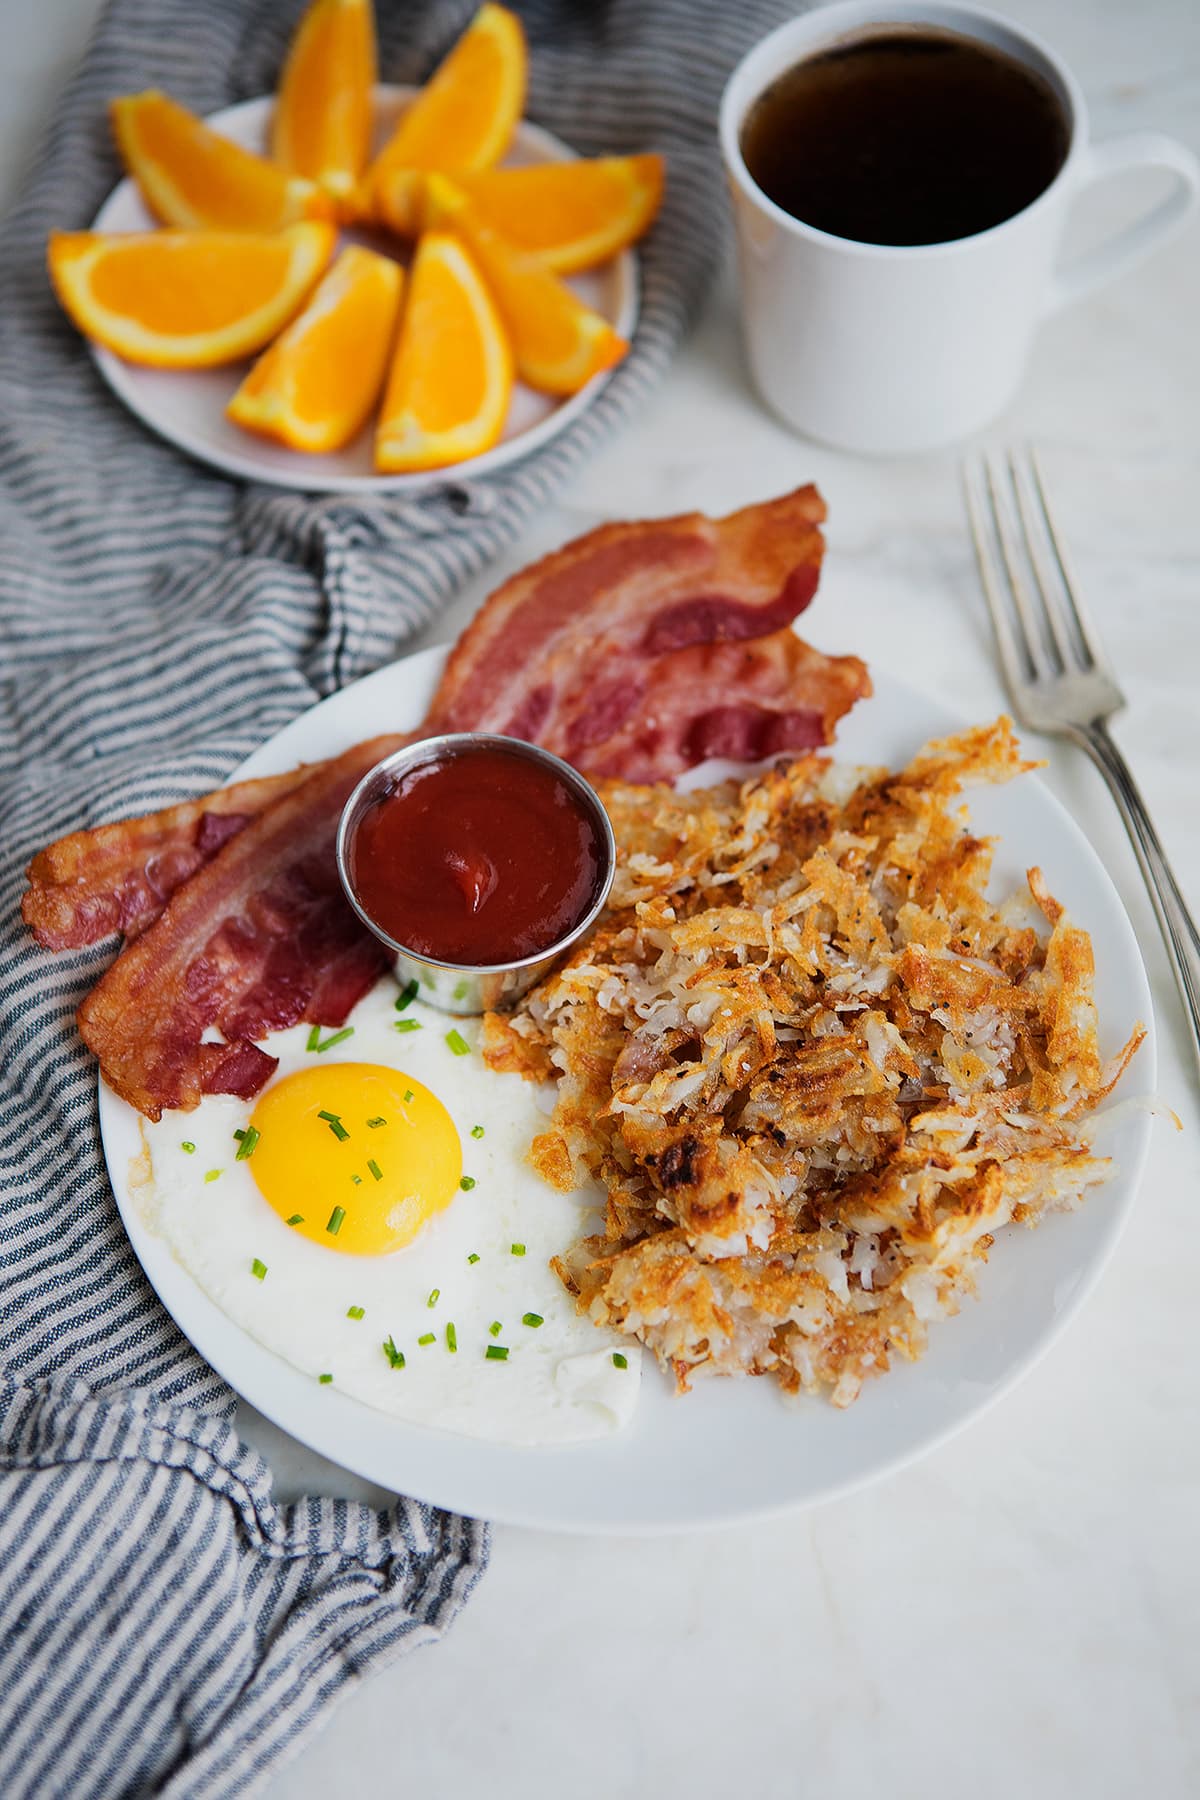 Tips for Preparing a Full Breakfast (Panini Press Hashbrowns)